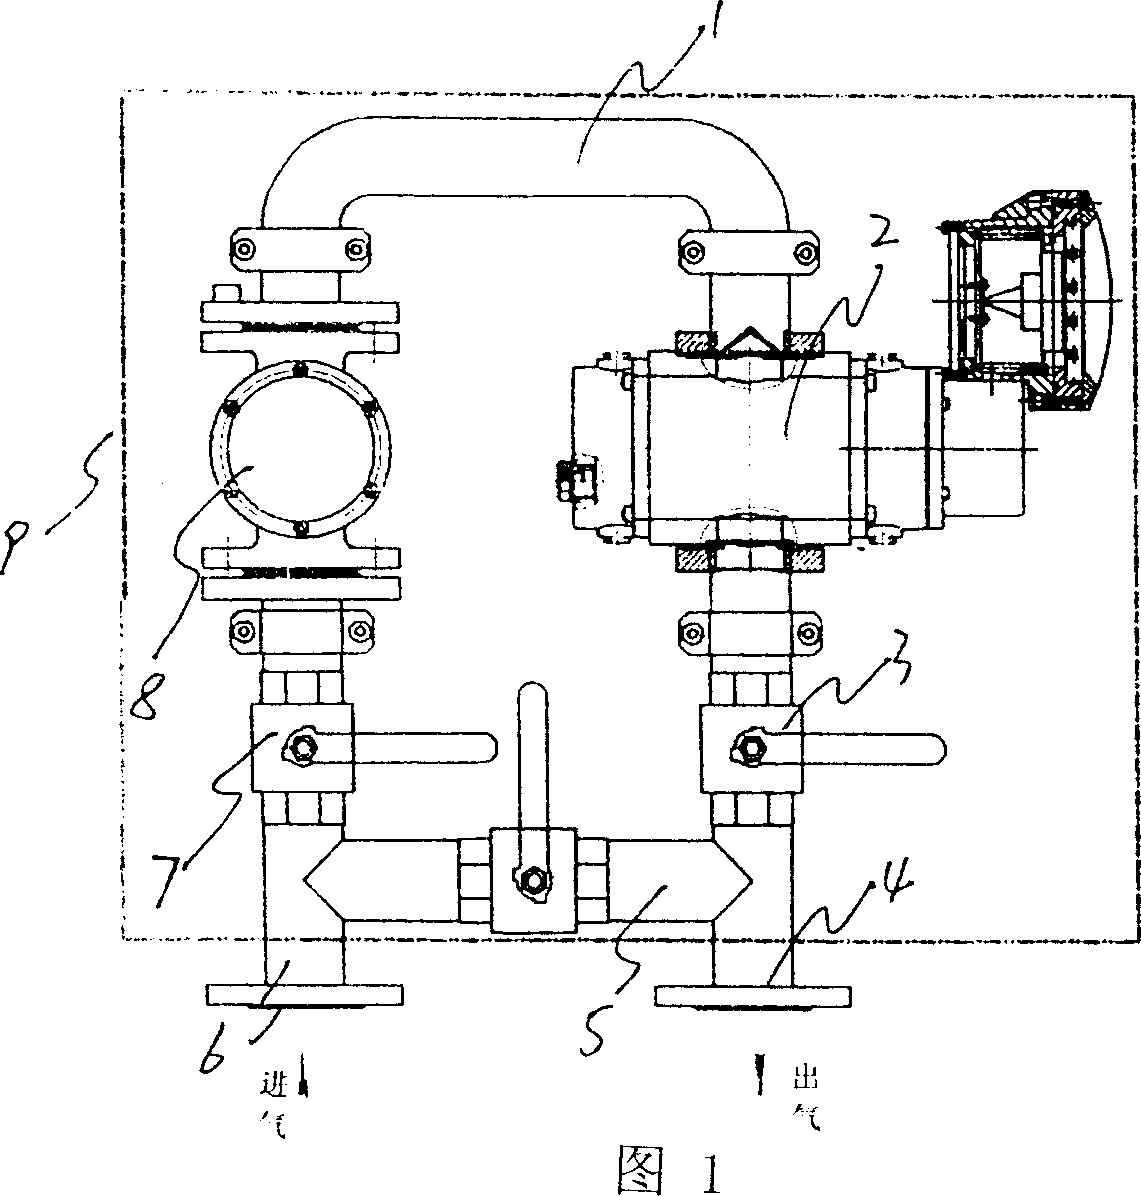 Gauging box of Roots gas flowmeter